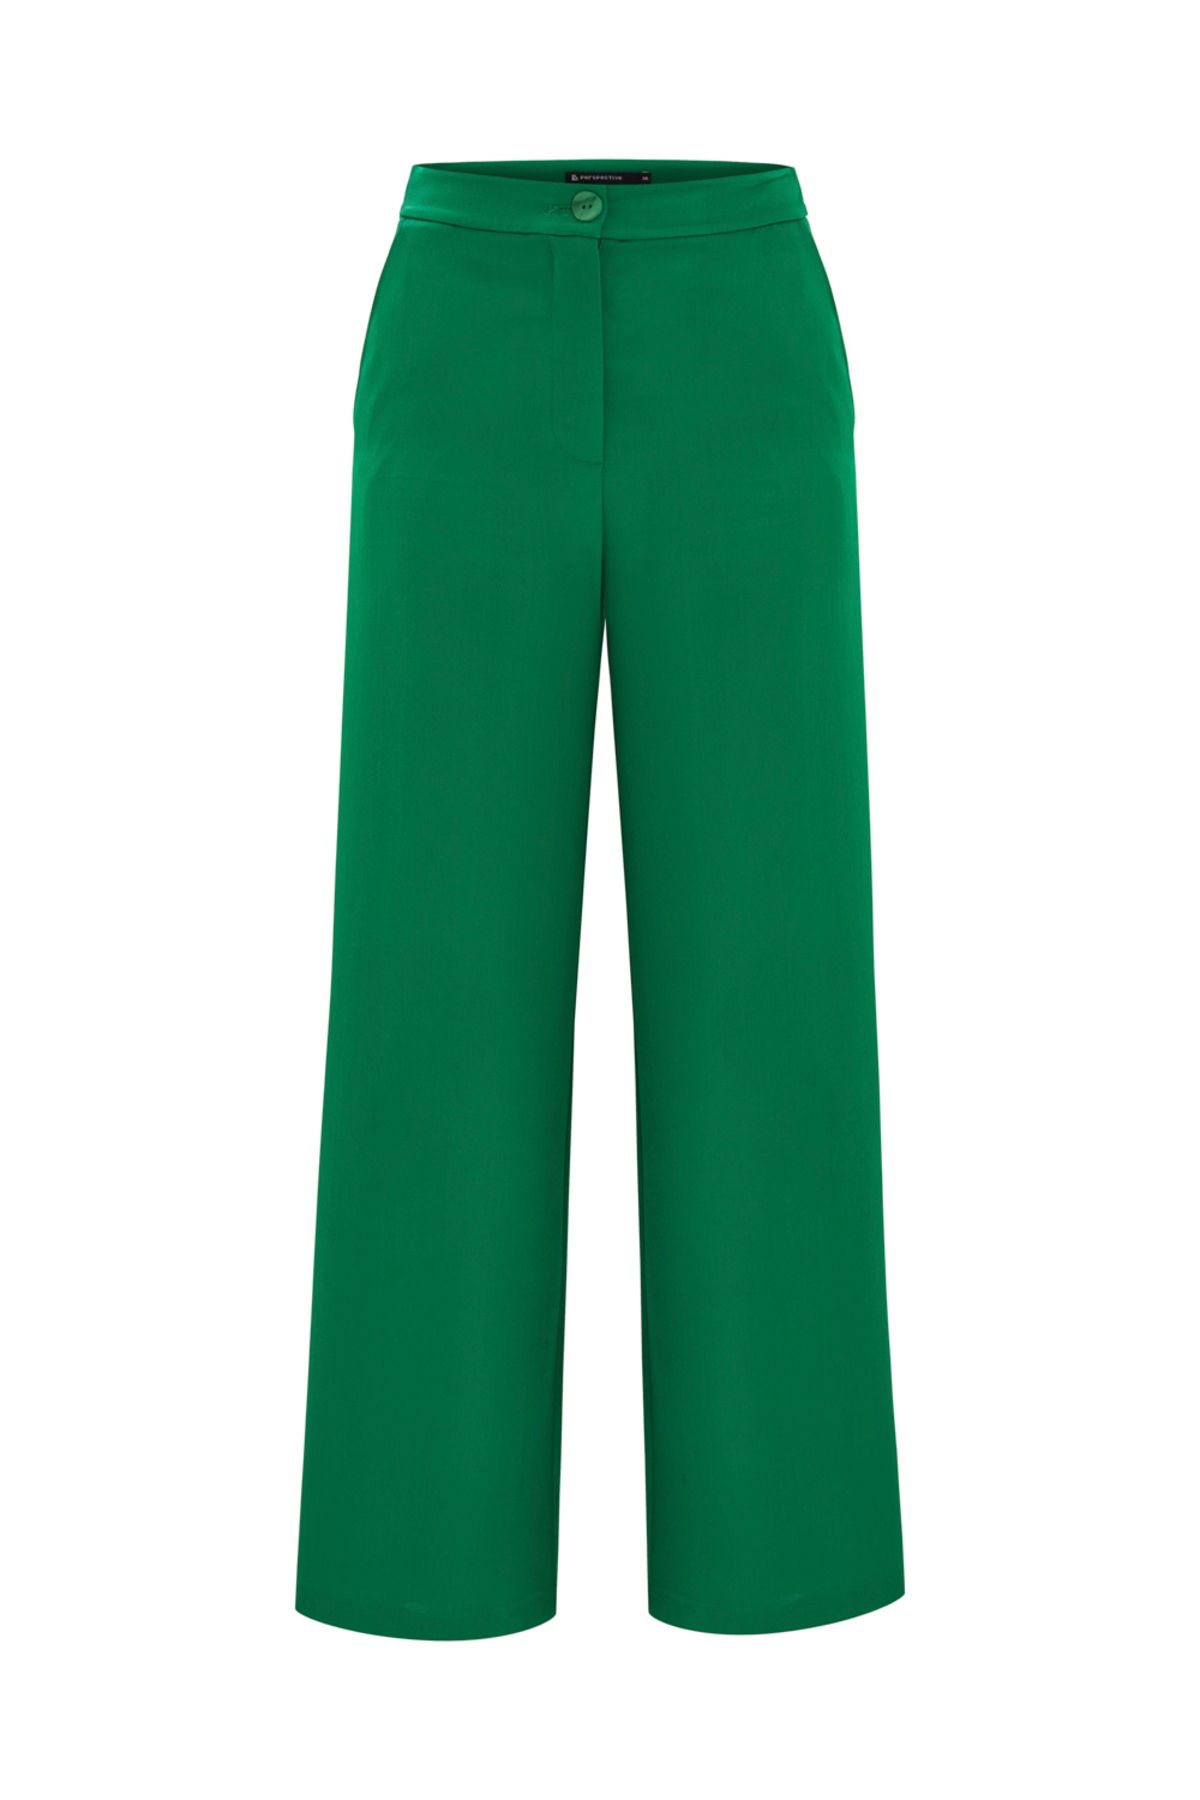 Perspective Caprinas Regular Fit Uzun Boy Yüksek Bel Yeşil Renk Kadın Pantolon